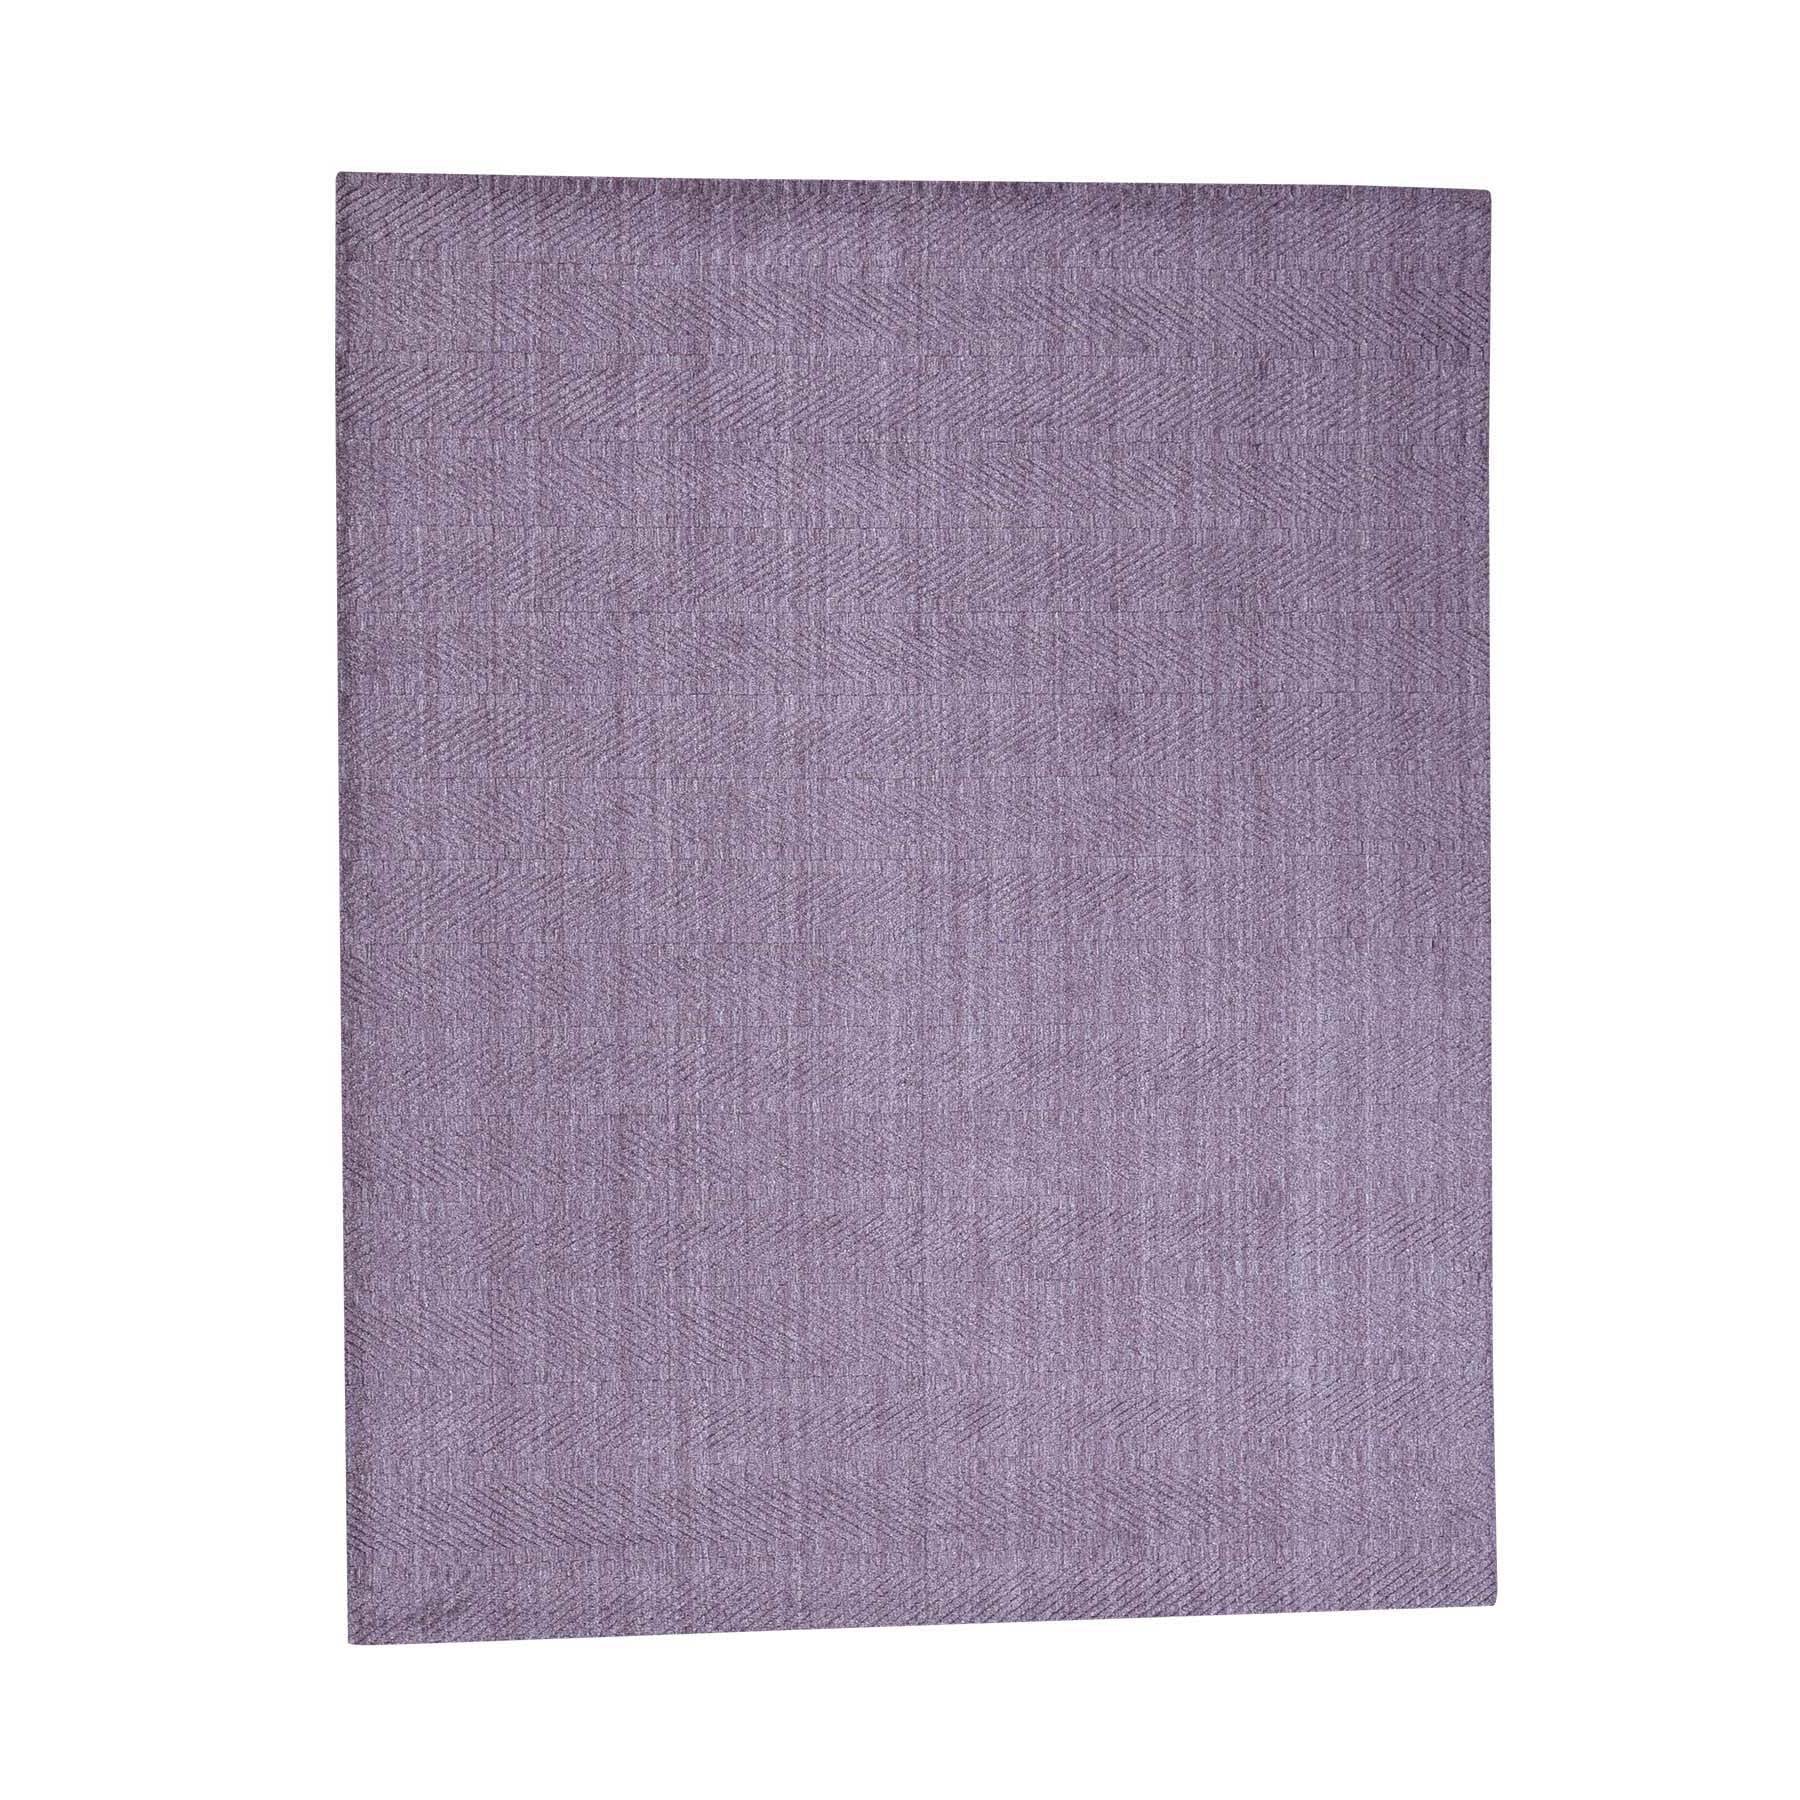 8'x10' Tone on Tone Purple Hand-Loomed Pure Wool Oriental Rug 